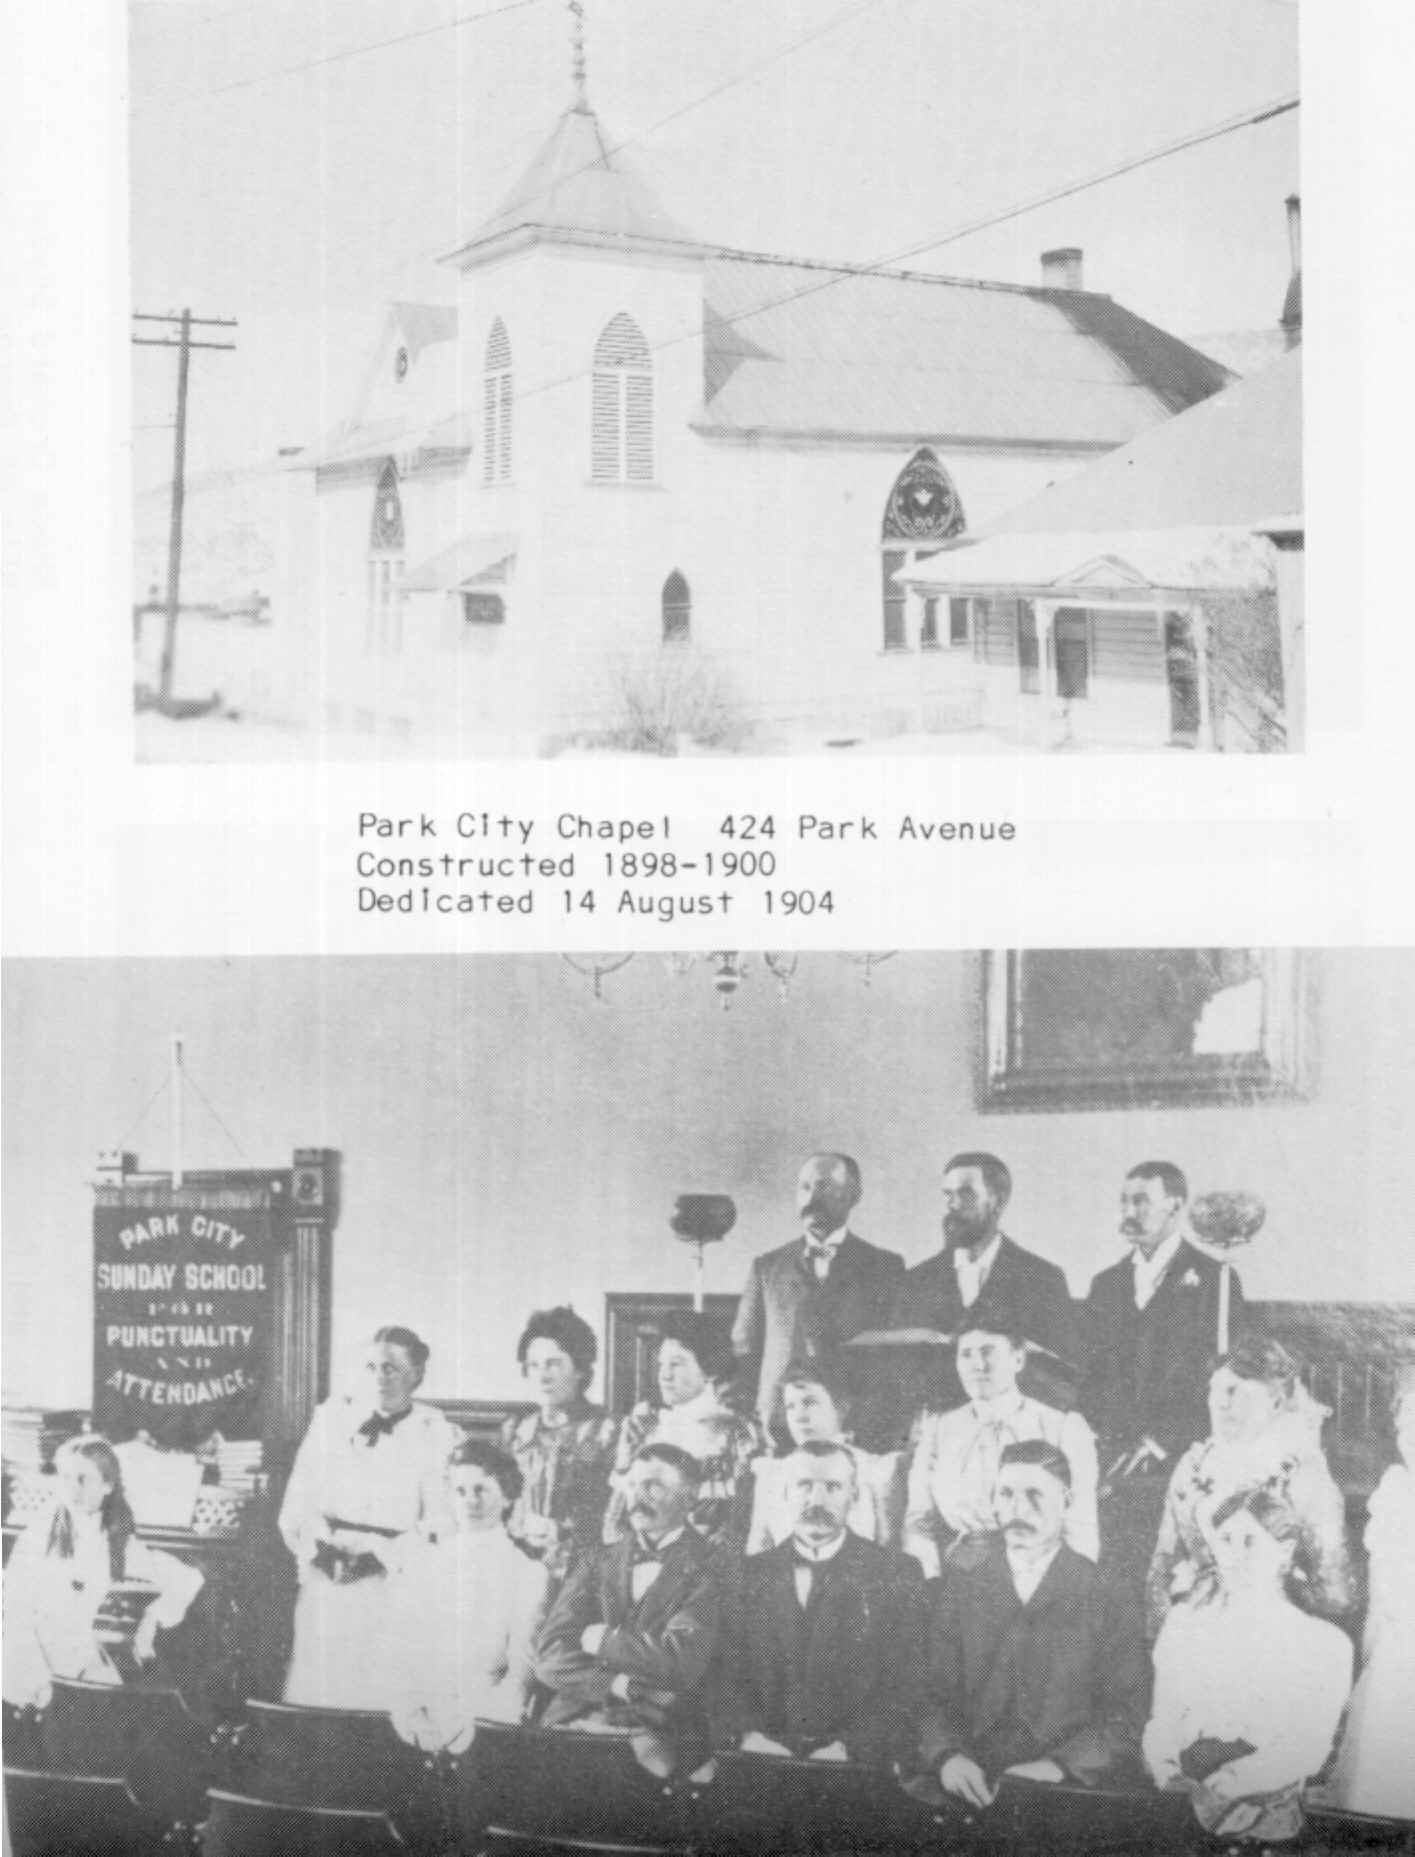 Park City Sunday School organized September 2, 1884, Chapel dedicated 1904